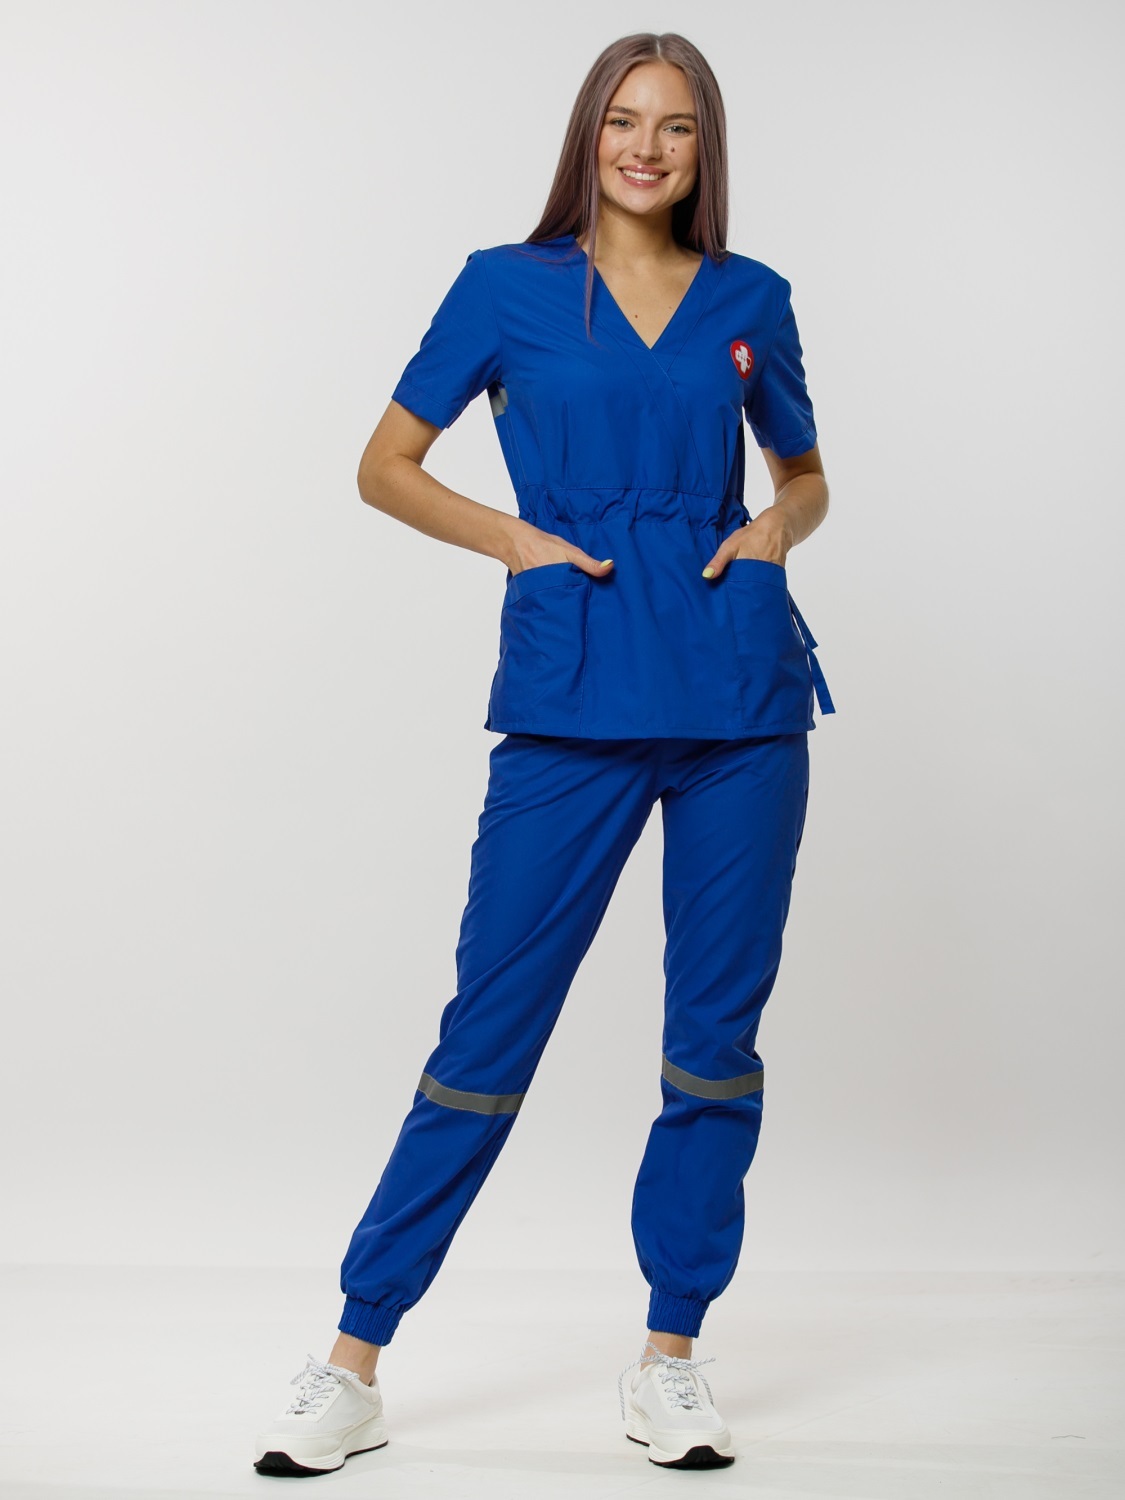 Синие медицинские костюмы. Синий медицинский костюм. Костюм скорой помощи женский. Медицинский костюм женский синий. Голубой медицинский костюм.